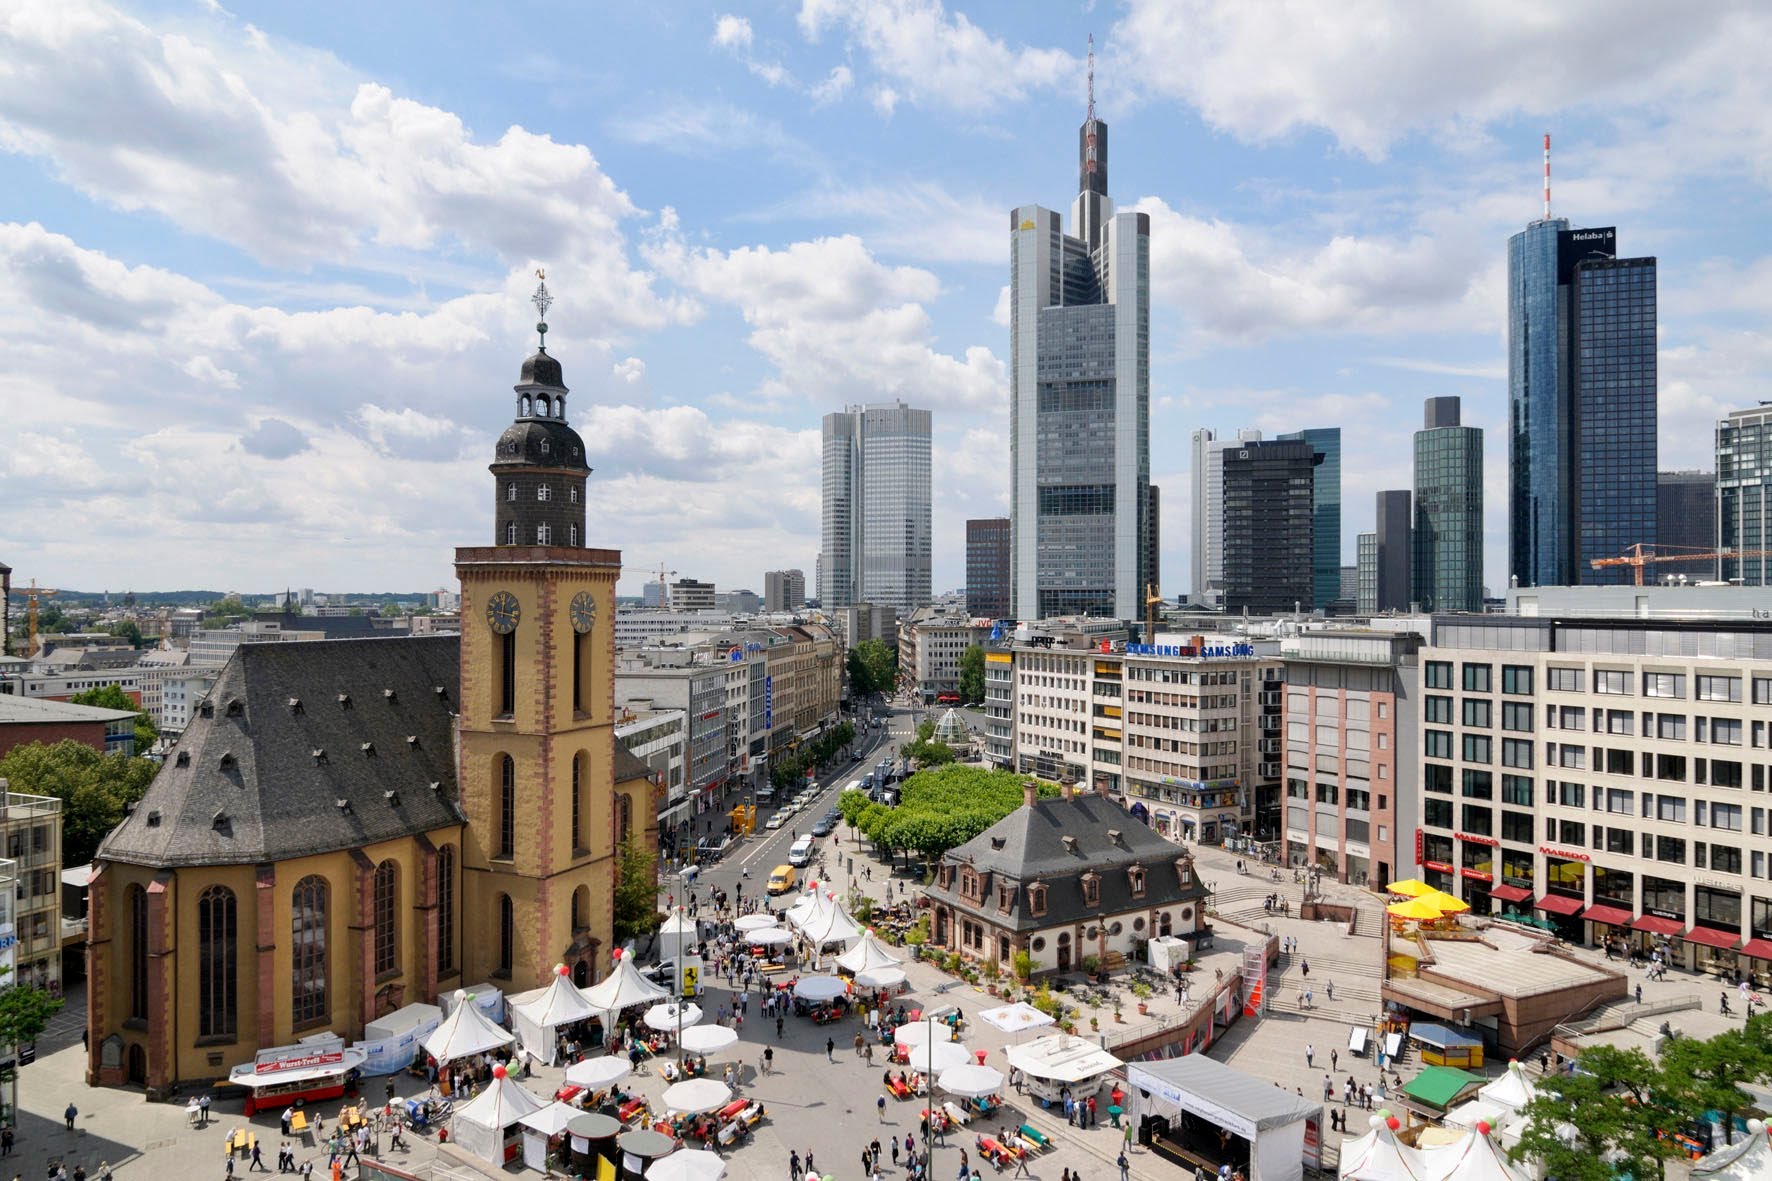 Frankfurt city photo